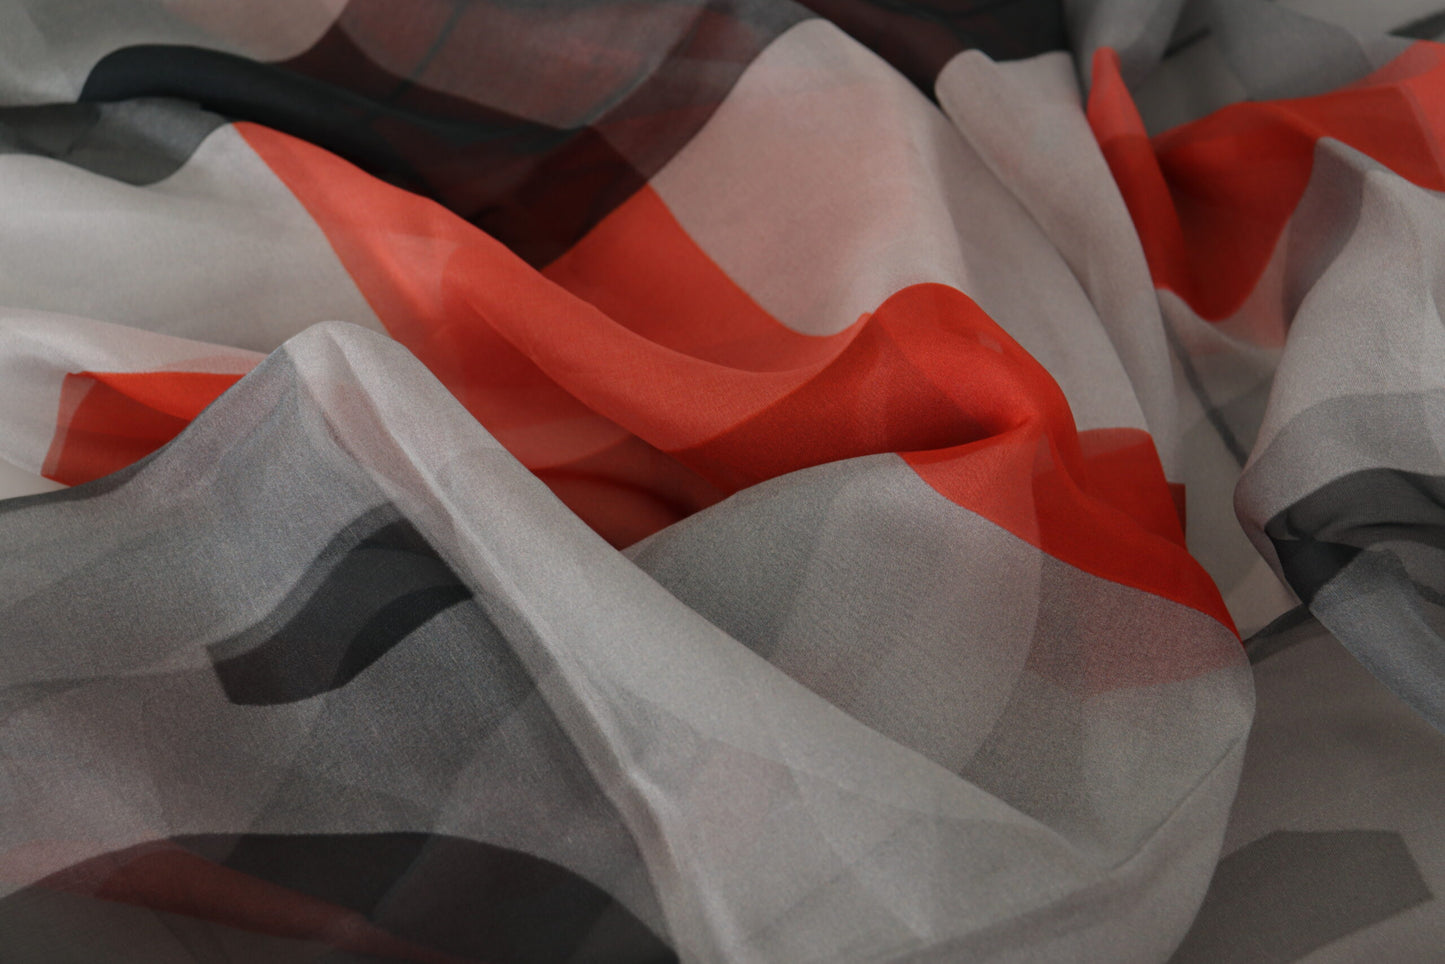 Kostüm Nationaler grauer roter Schal -Foulard -Wickelschal